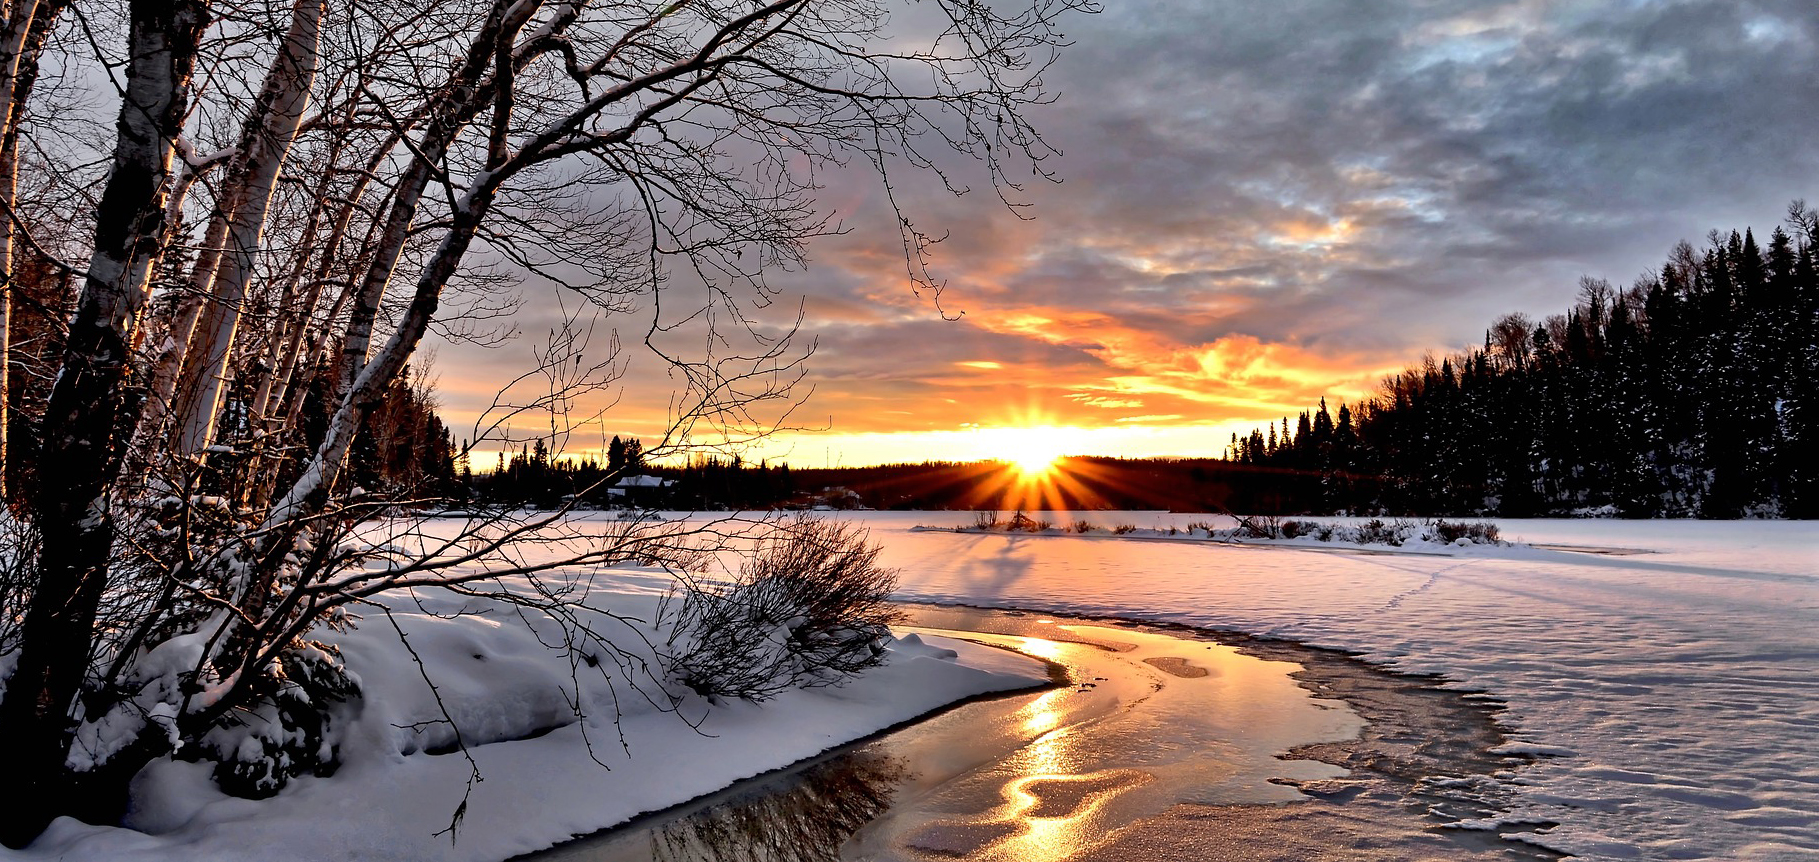 Sunset on winter landscape.